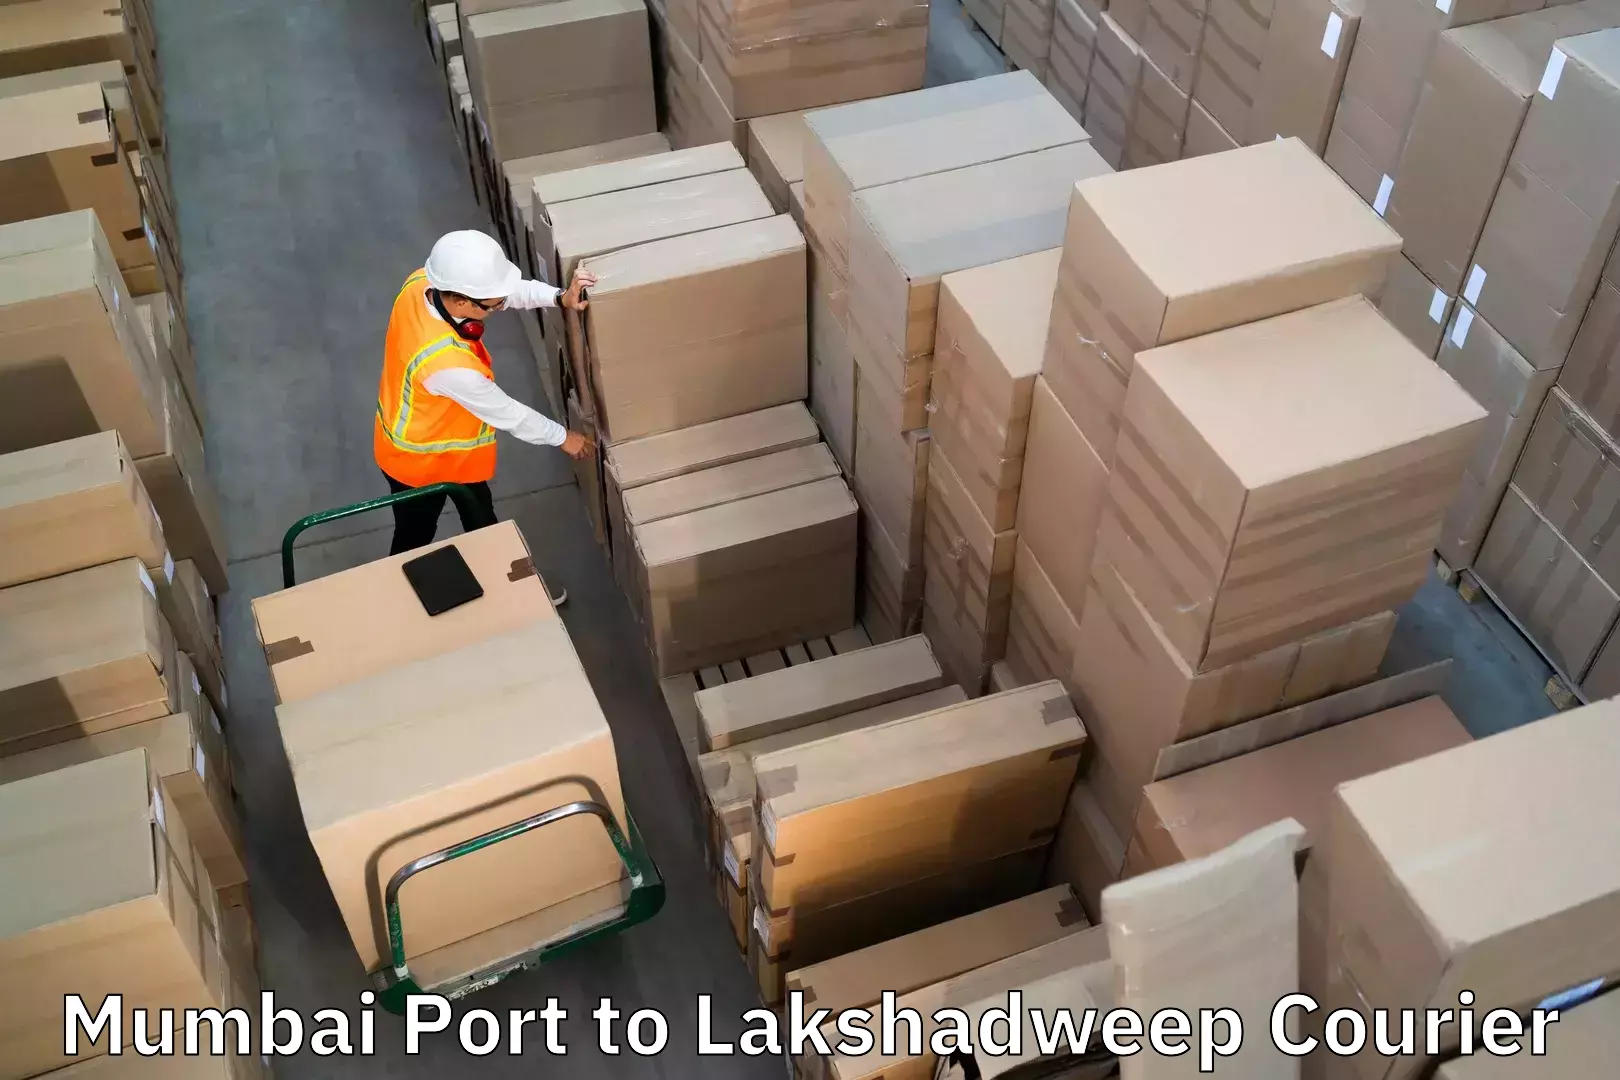 Expedited baggage courier Mumbai Port to Lakshadweep